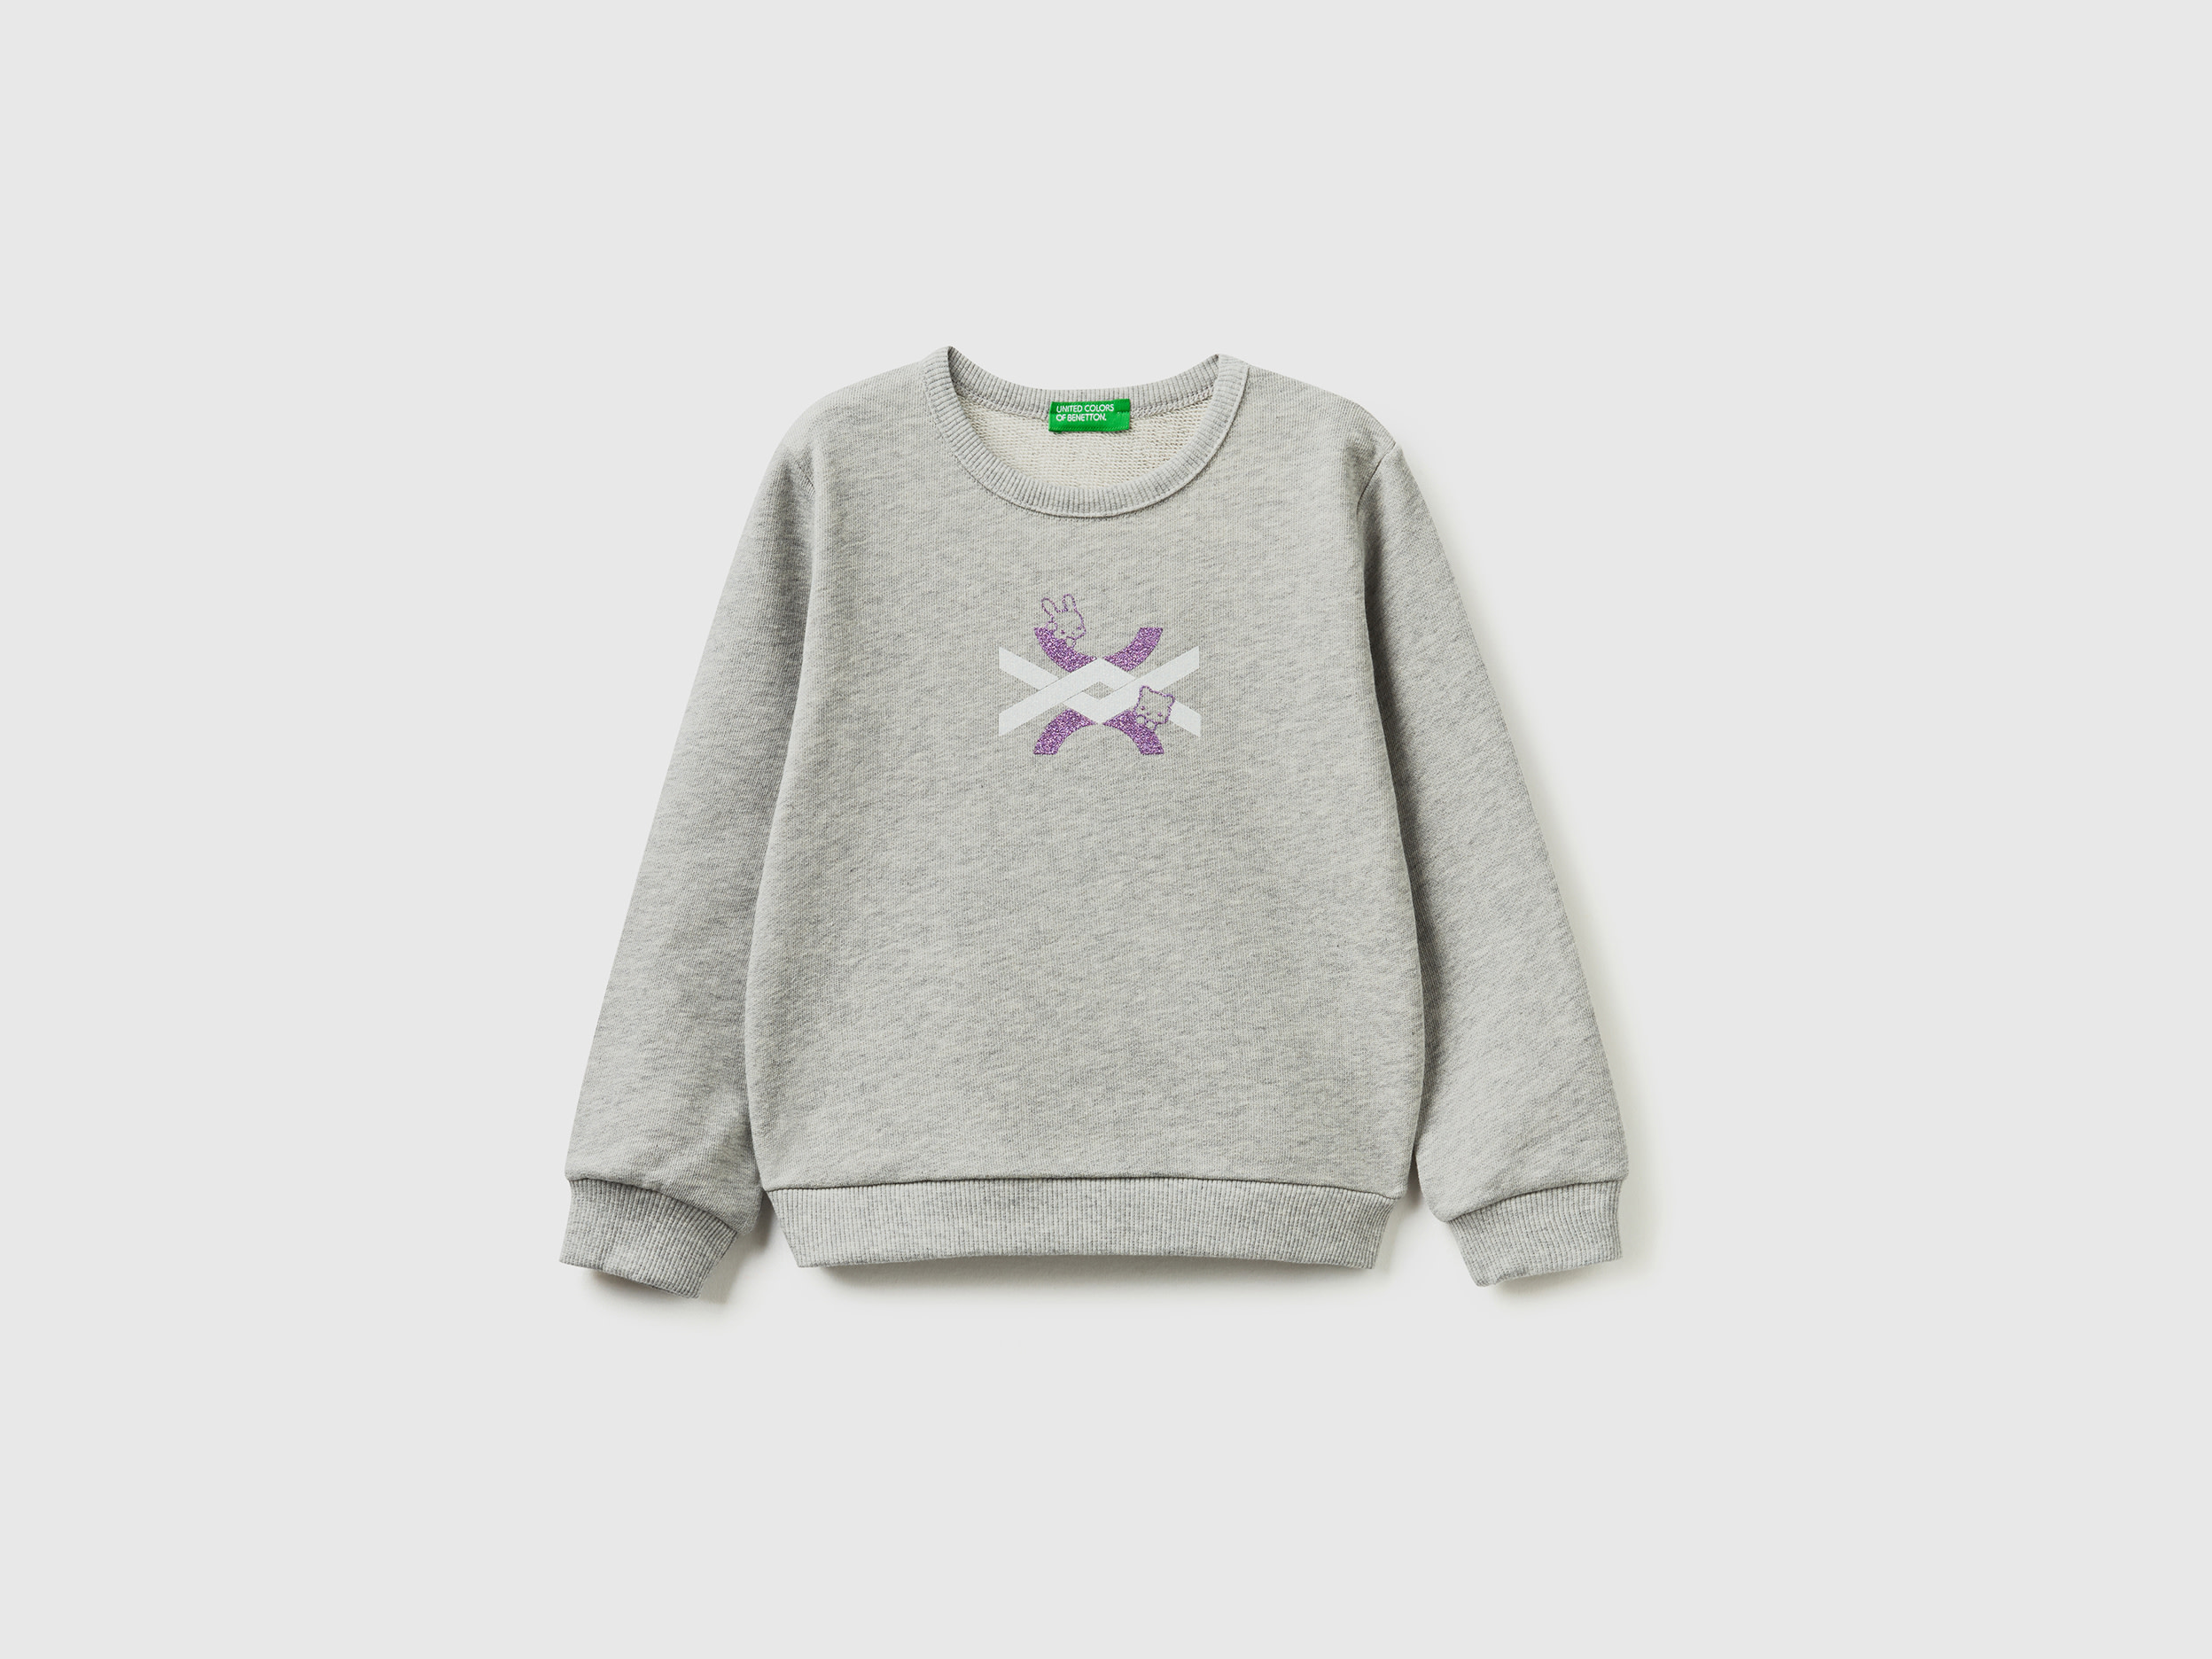 Benetton, Slub Gray Sweatshirt In Organic Cotton With Glittery Print, size 5-6, Light Gray, Kids